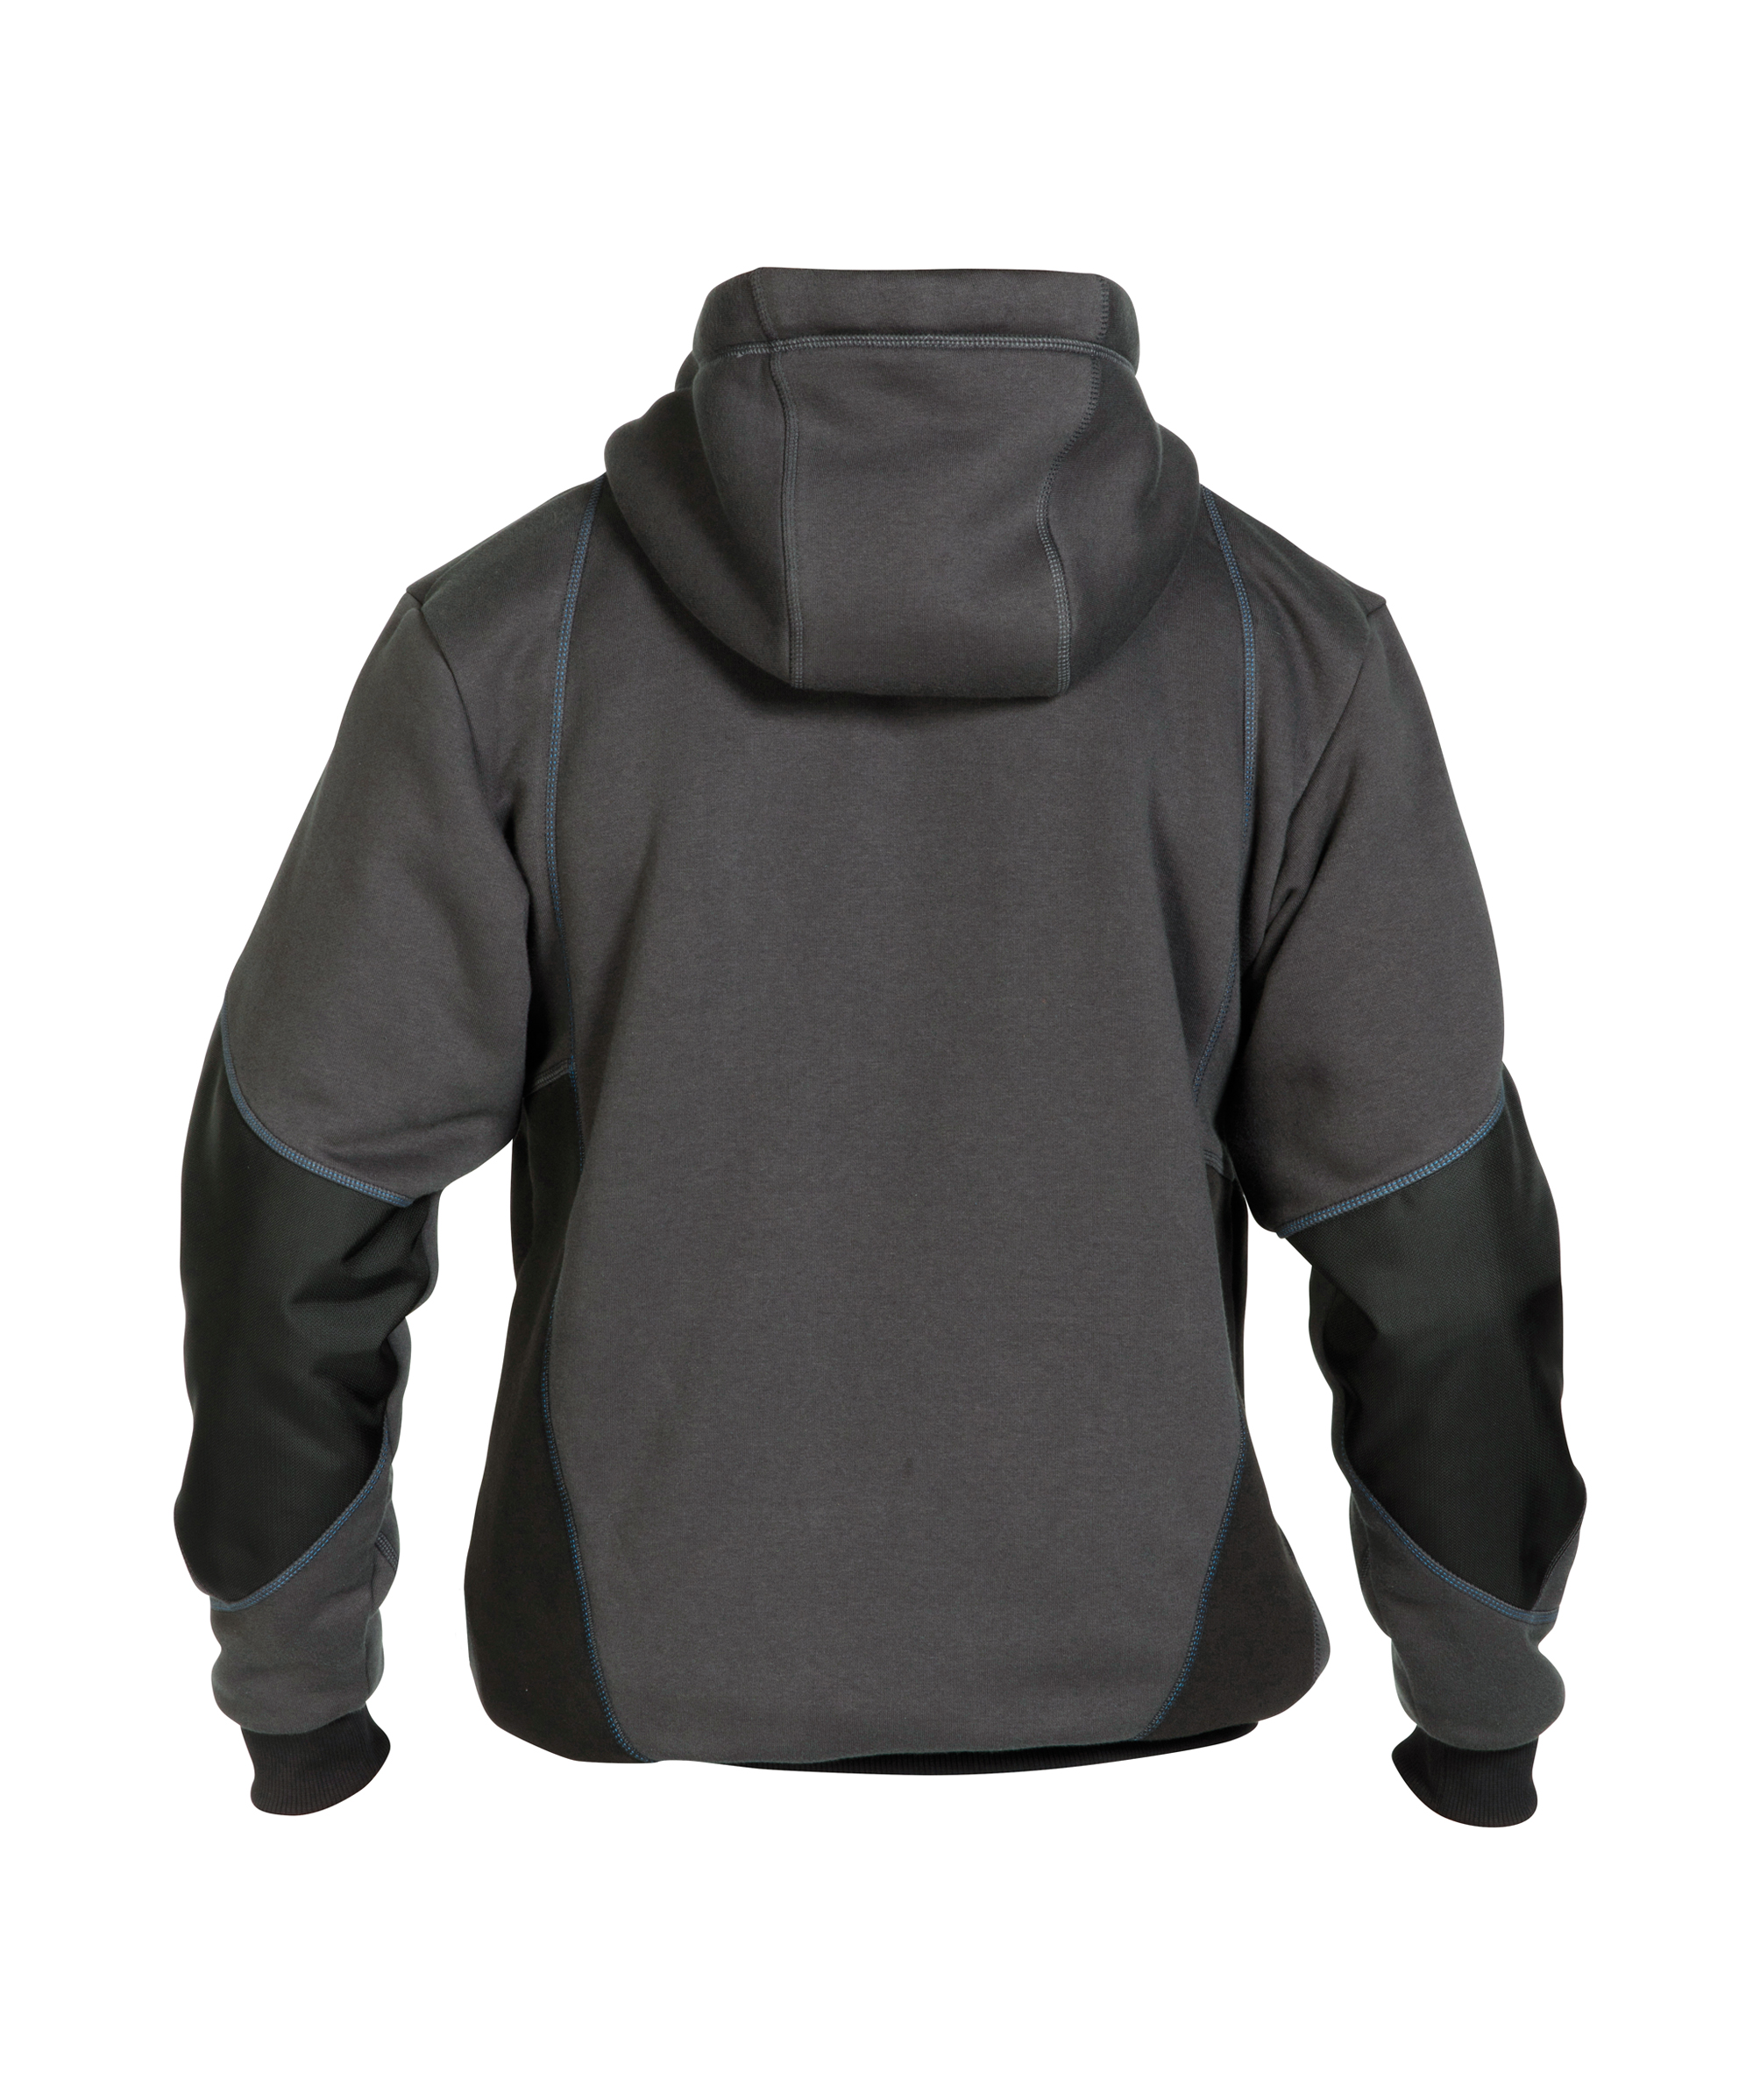 pulse_two-tone-sweatshirt-jacket_anthracite-grey-black_back.jpg